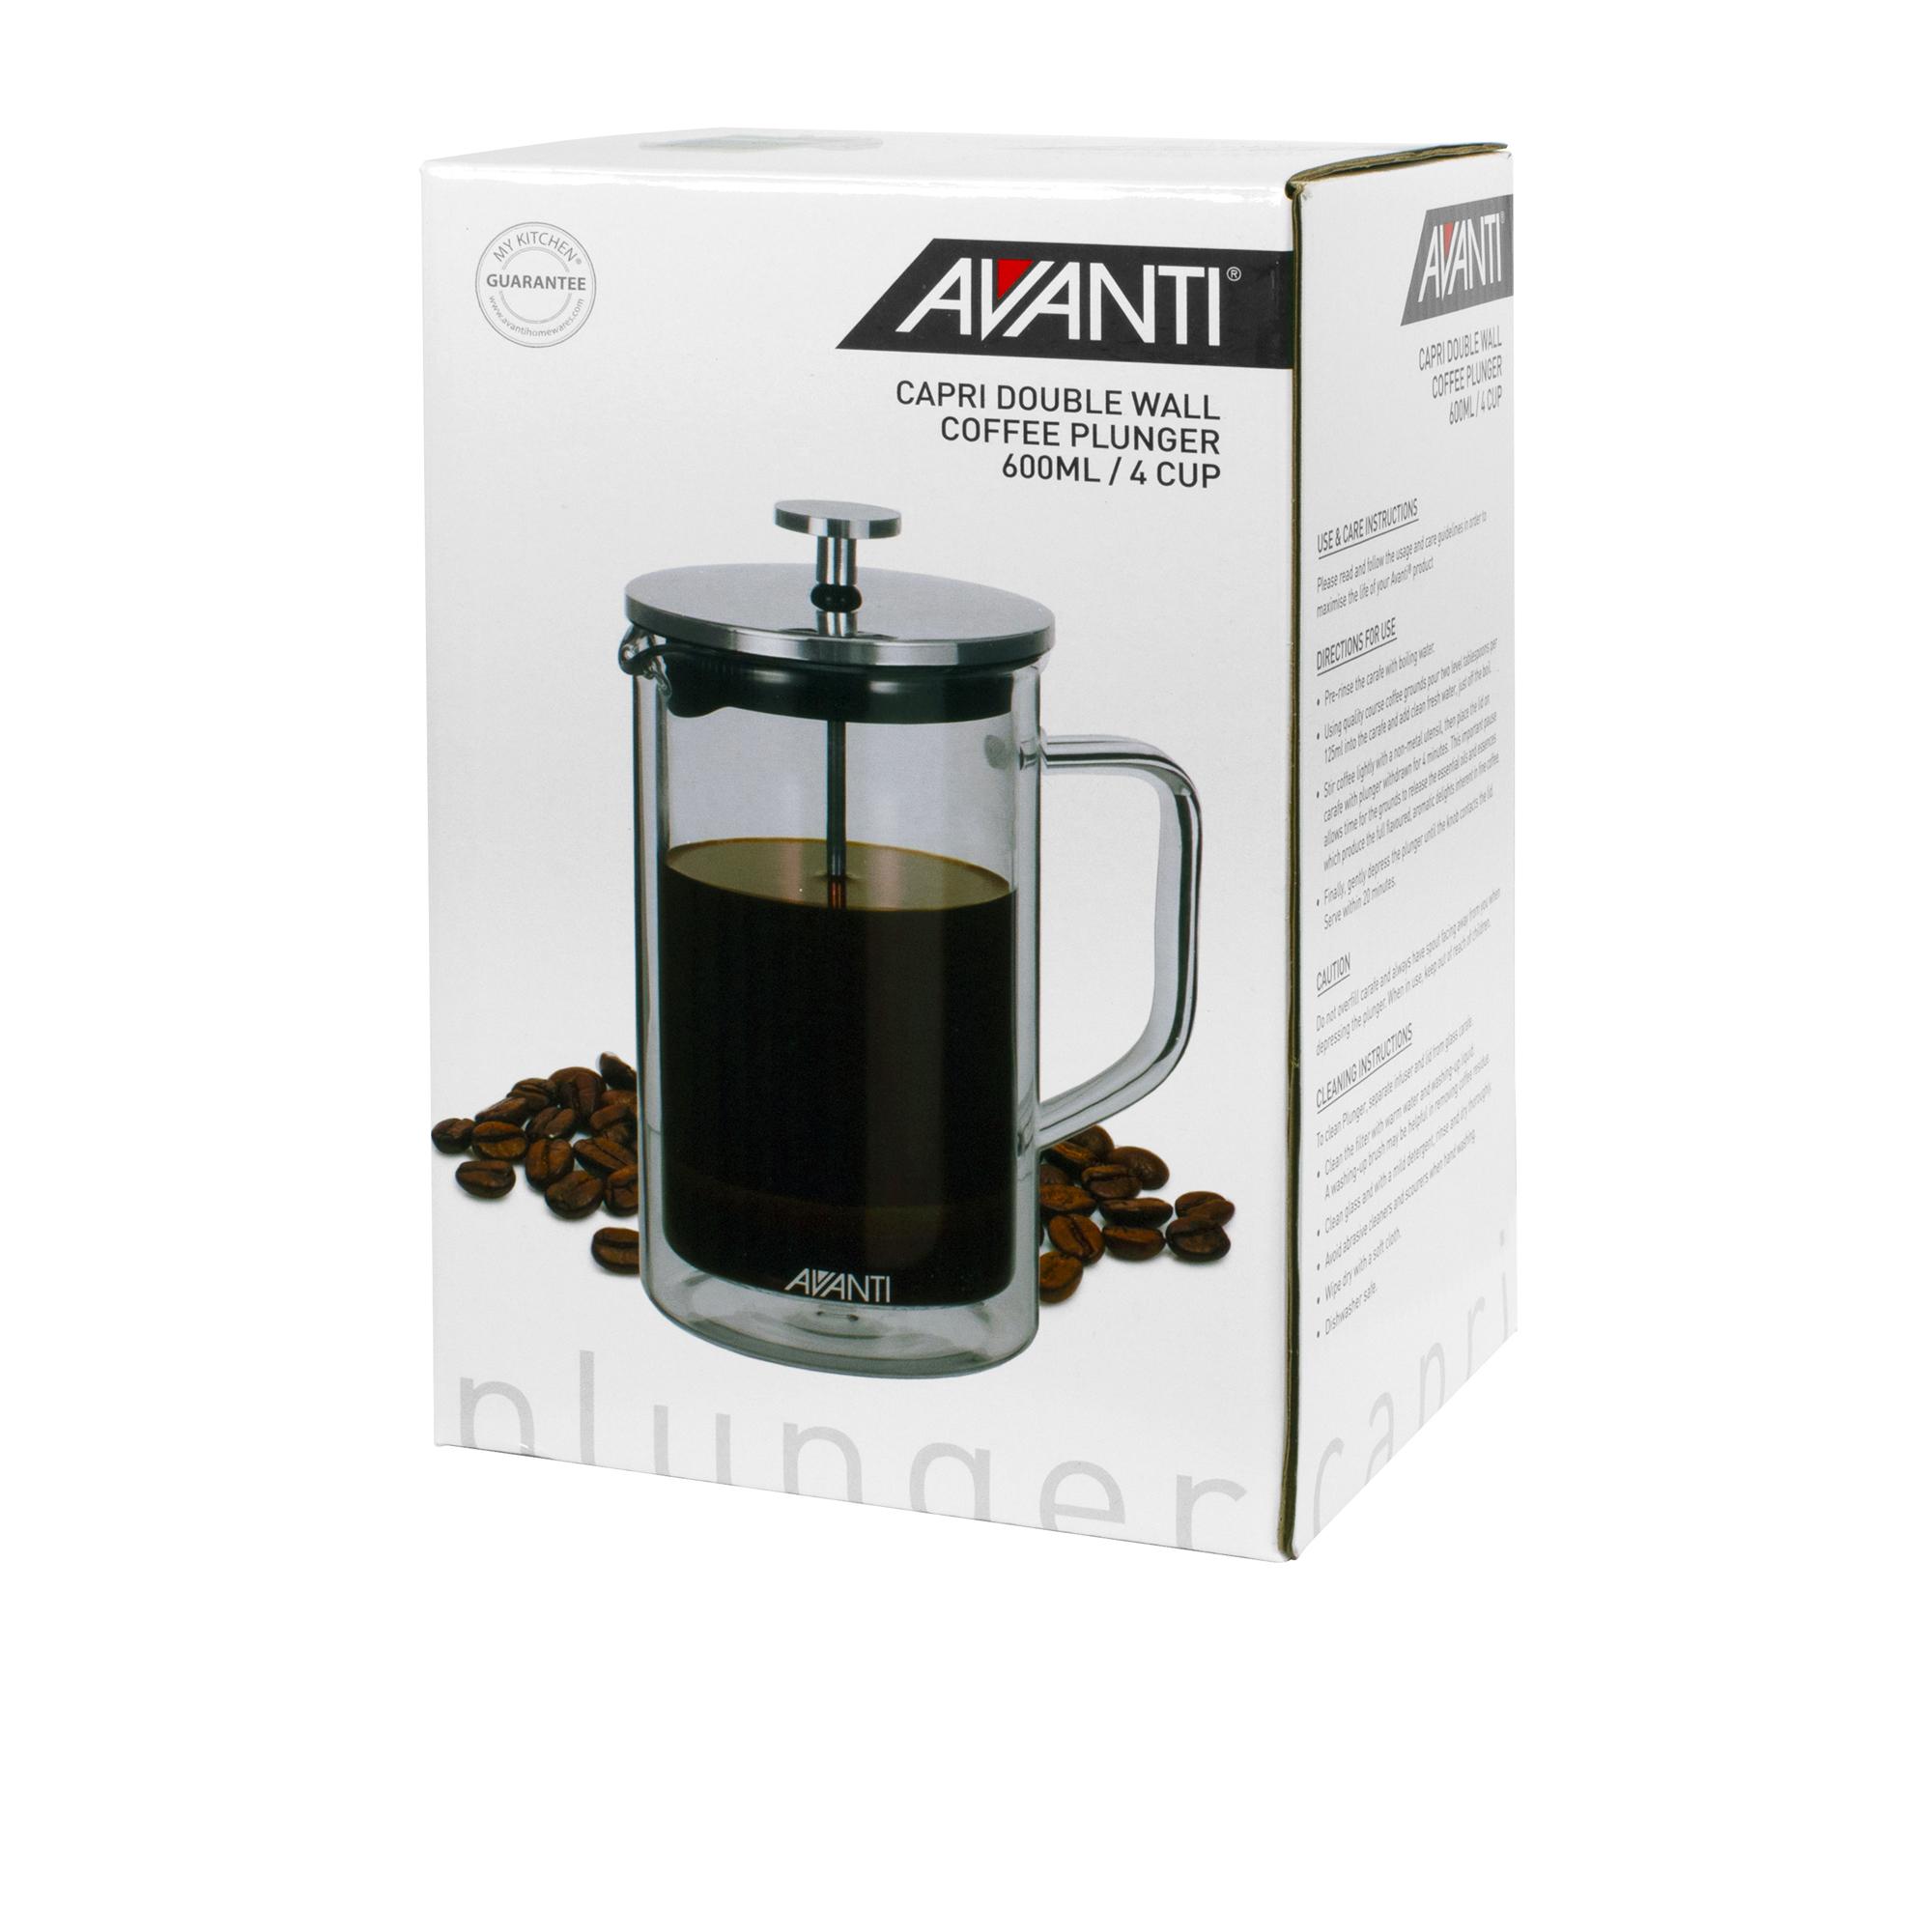 Avanti Capri Double Wall Coffee Plunger 4 Cup Image 4